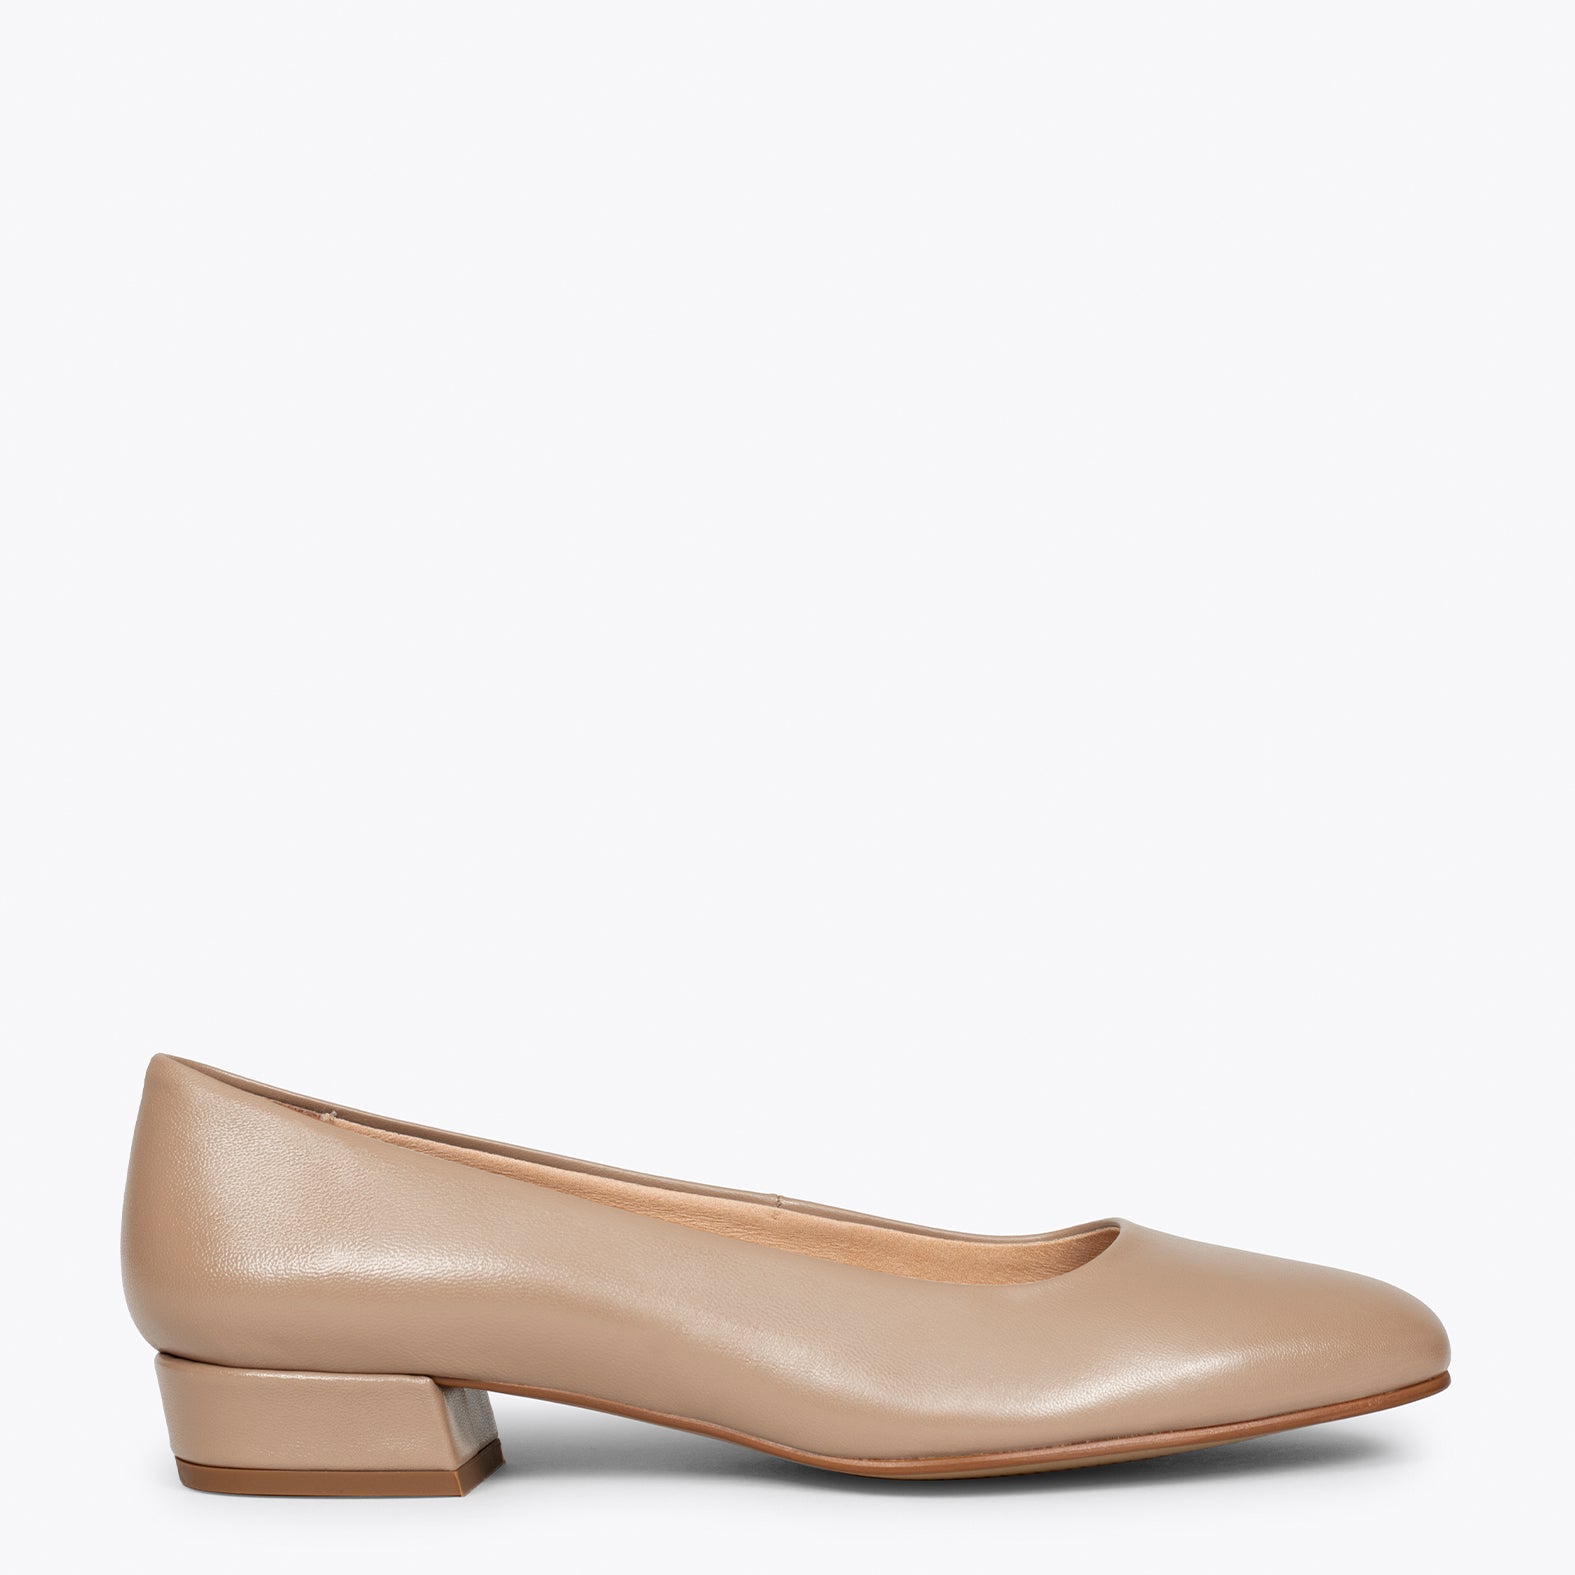 URBAN XS – CAMEL nappa leather low heel